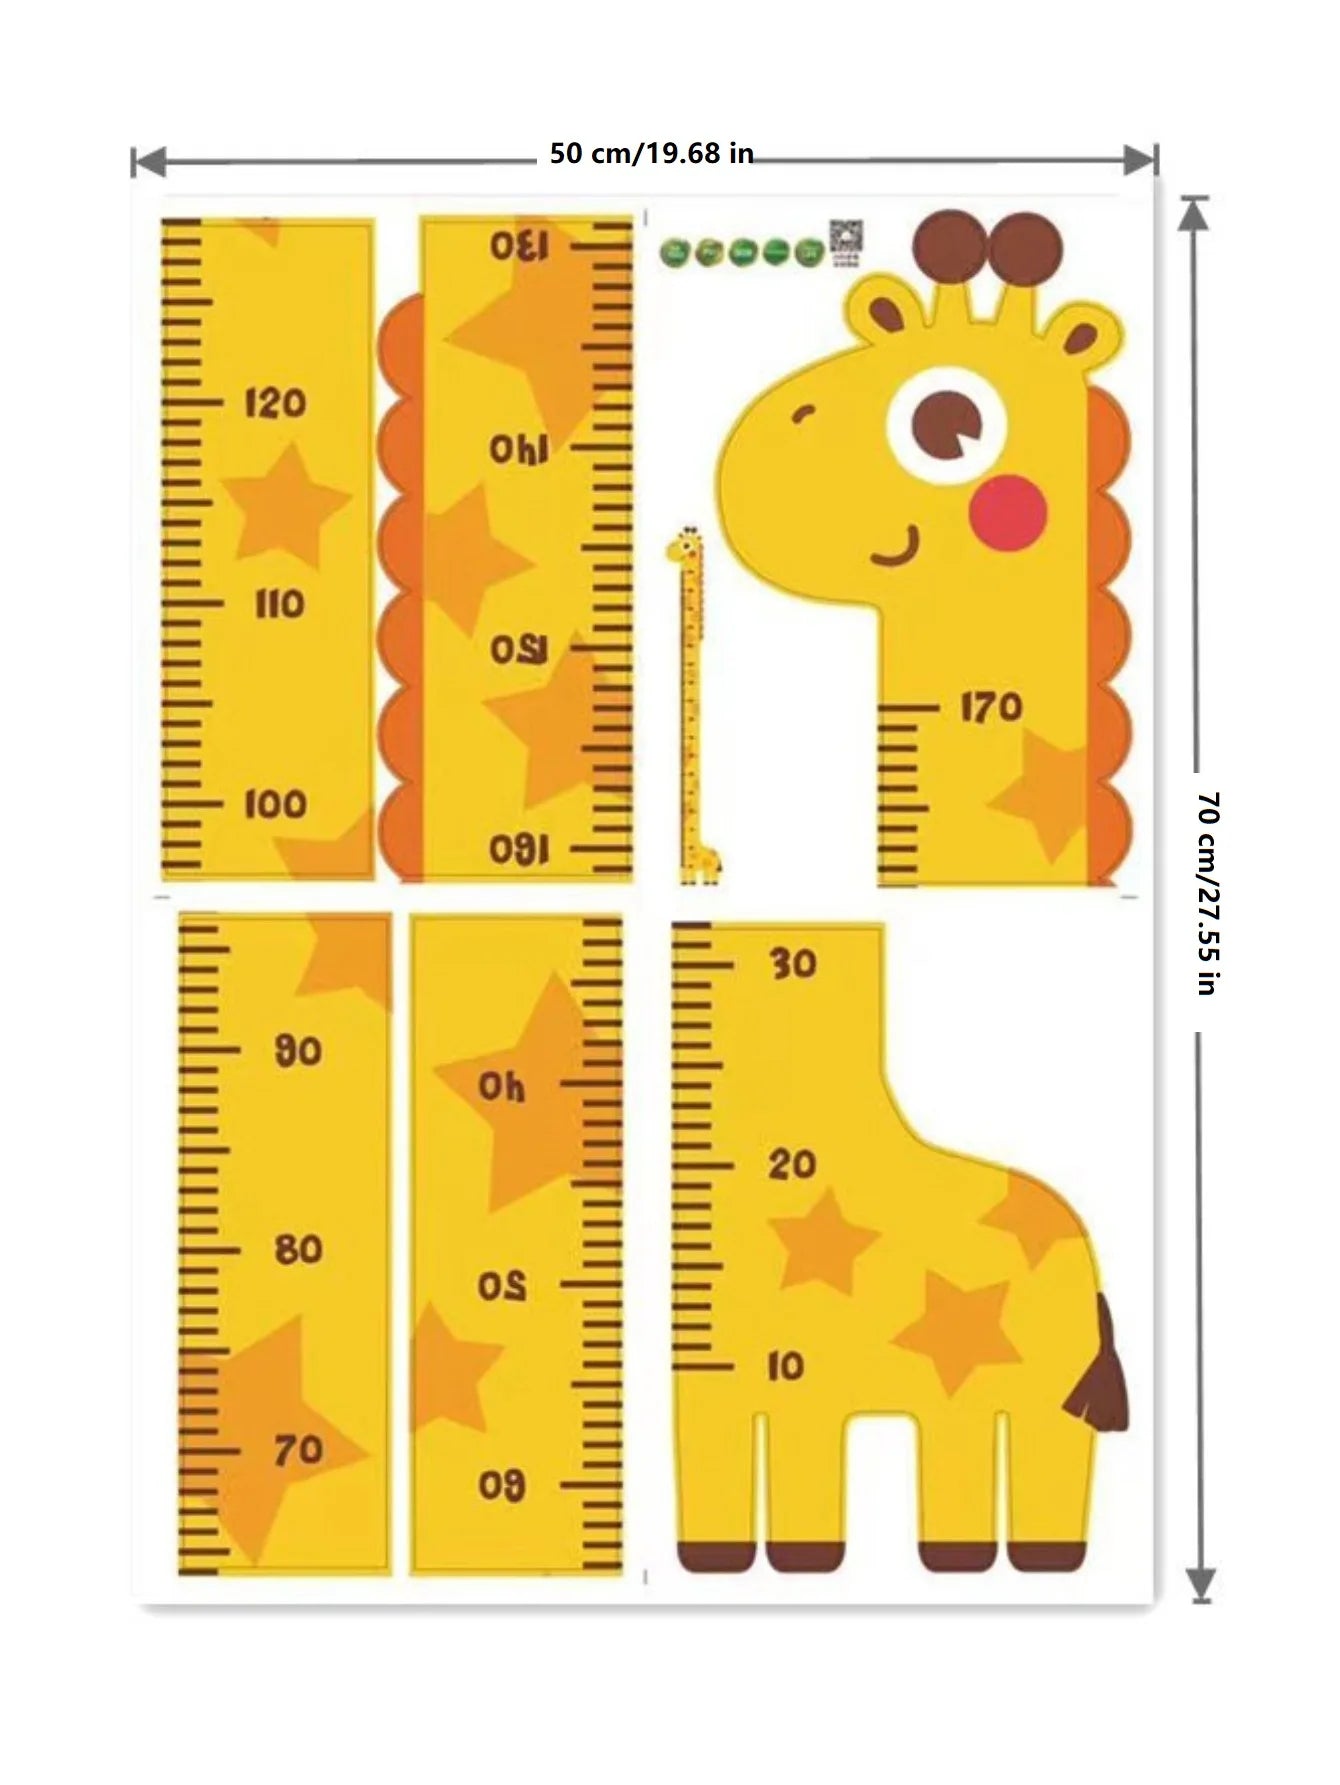 Cute Cartoon Height Sticker Unicorn Dinosaur Giraffe Wall Height Measuring Ruler Stickers For Kids Room Kindergarten Decor-Dollar Bargains Online Shopping Australia